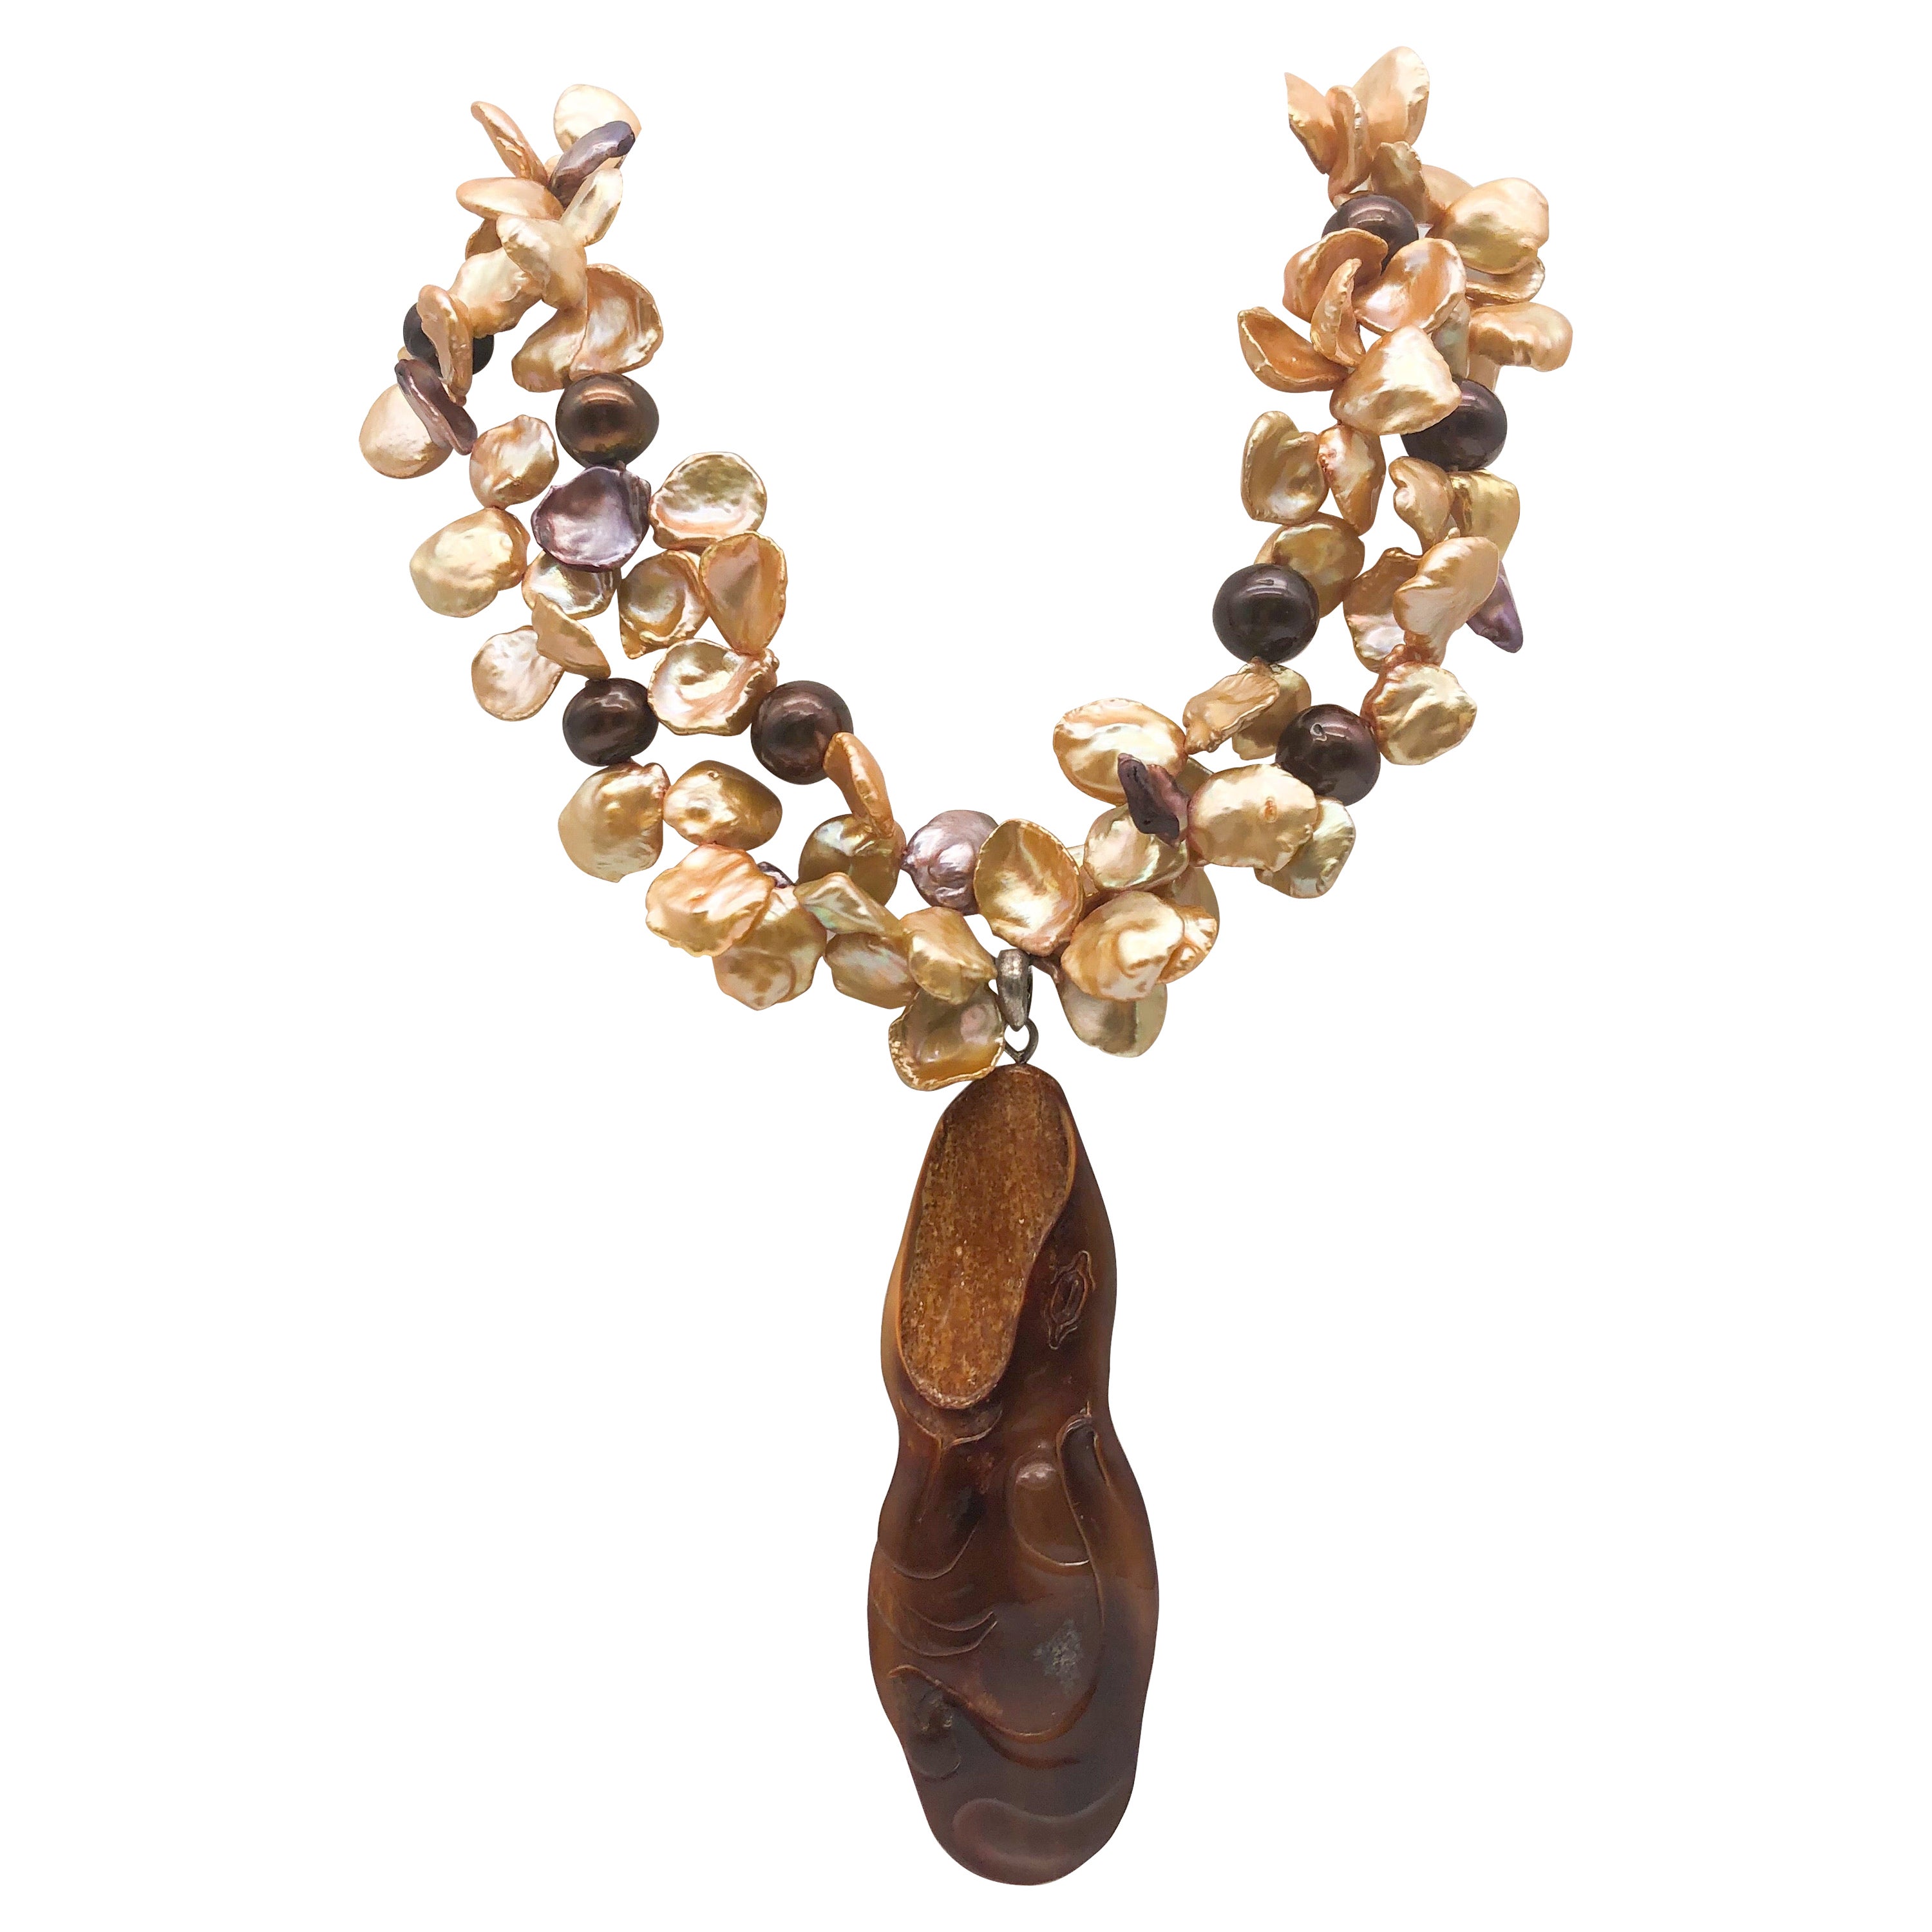 A.Jeschel Fossilized Scrimshaw Walrus pendant necklace For Sale